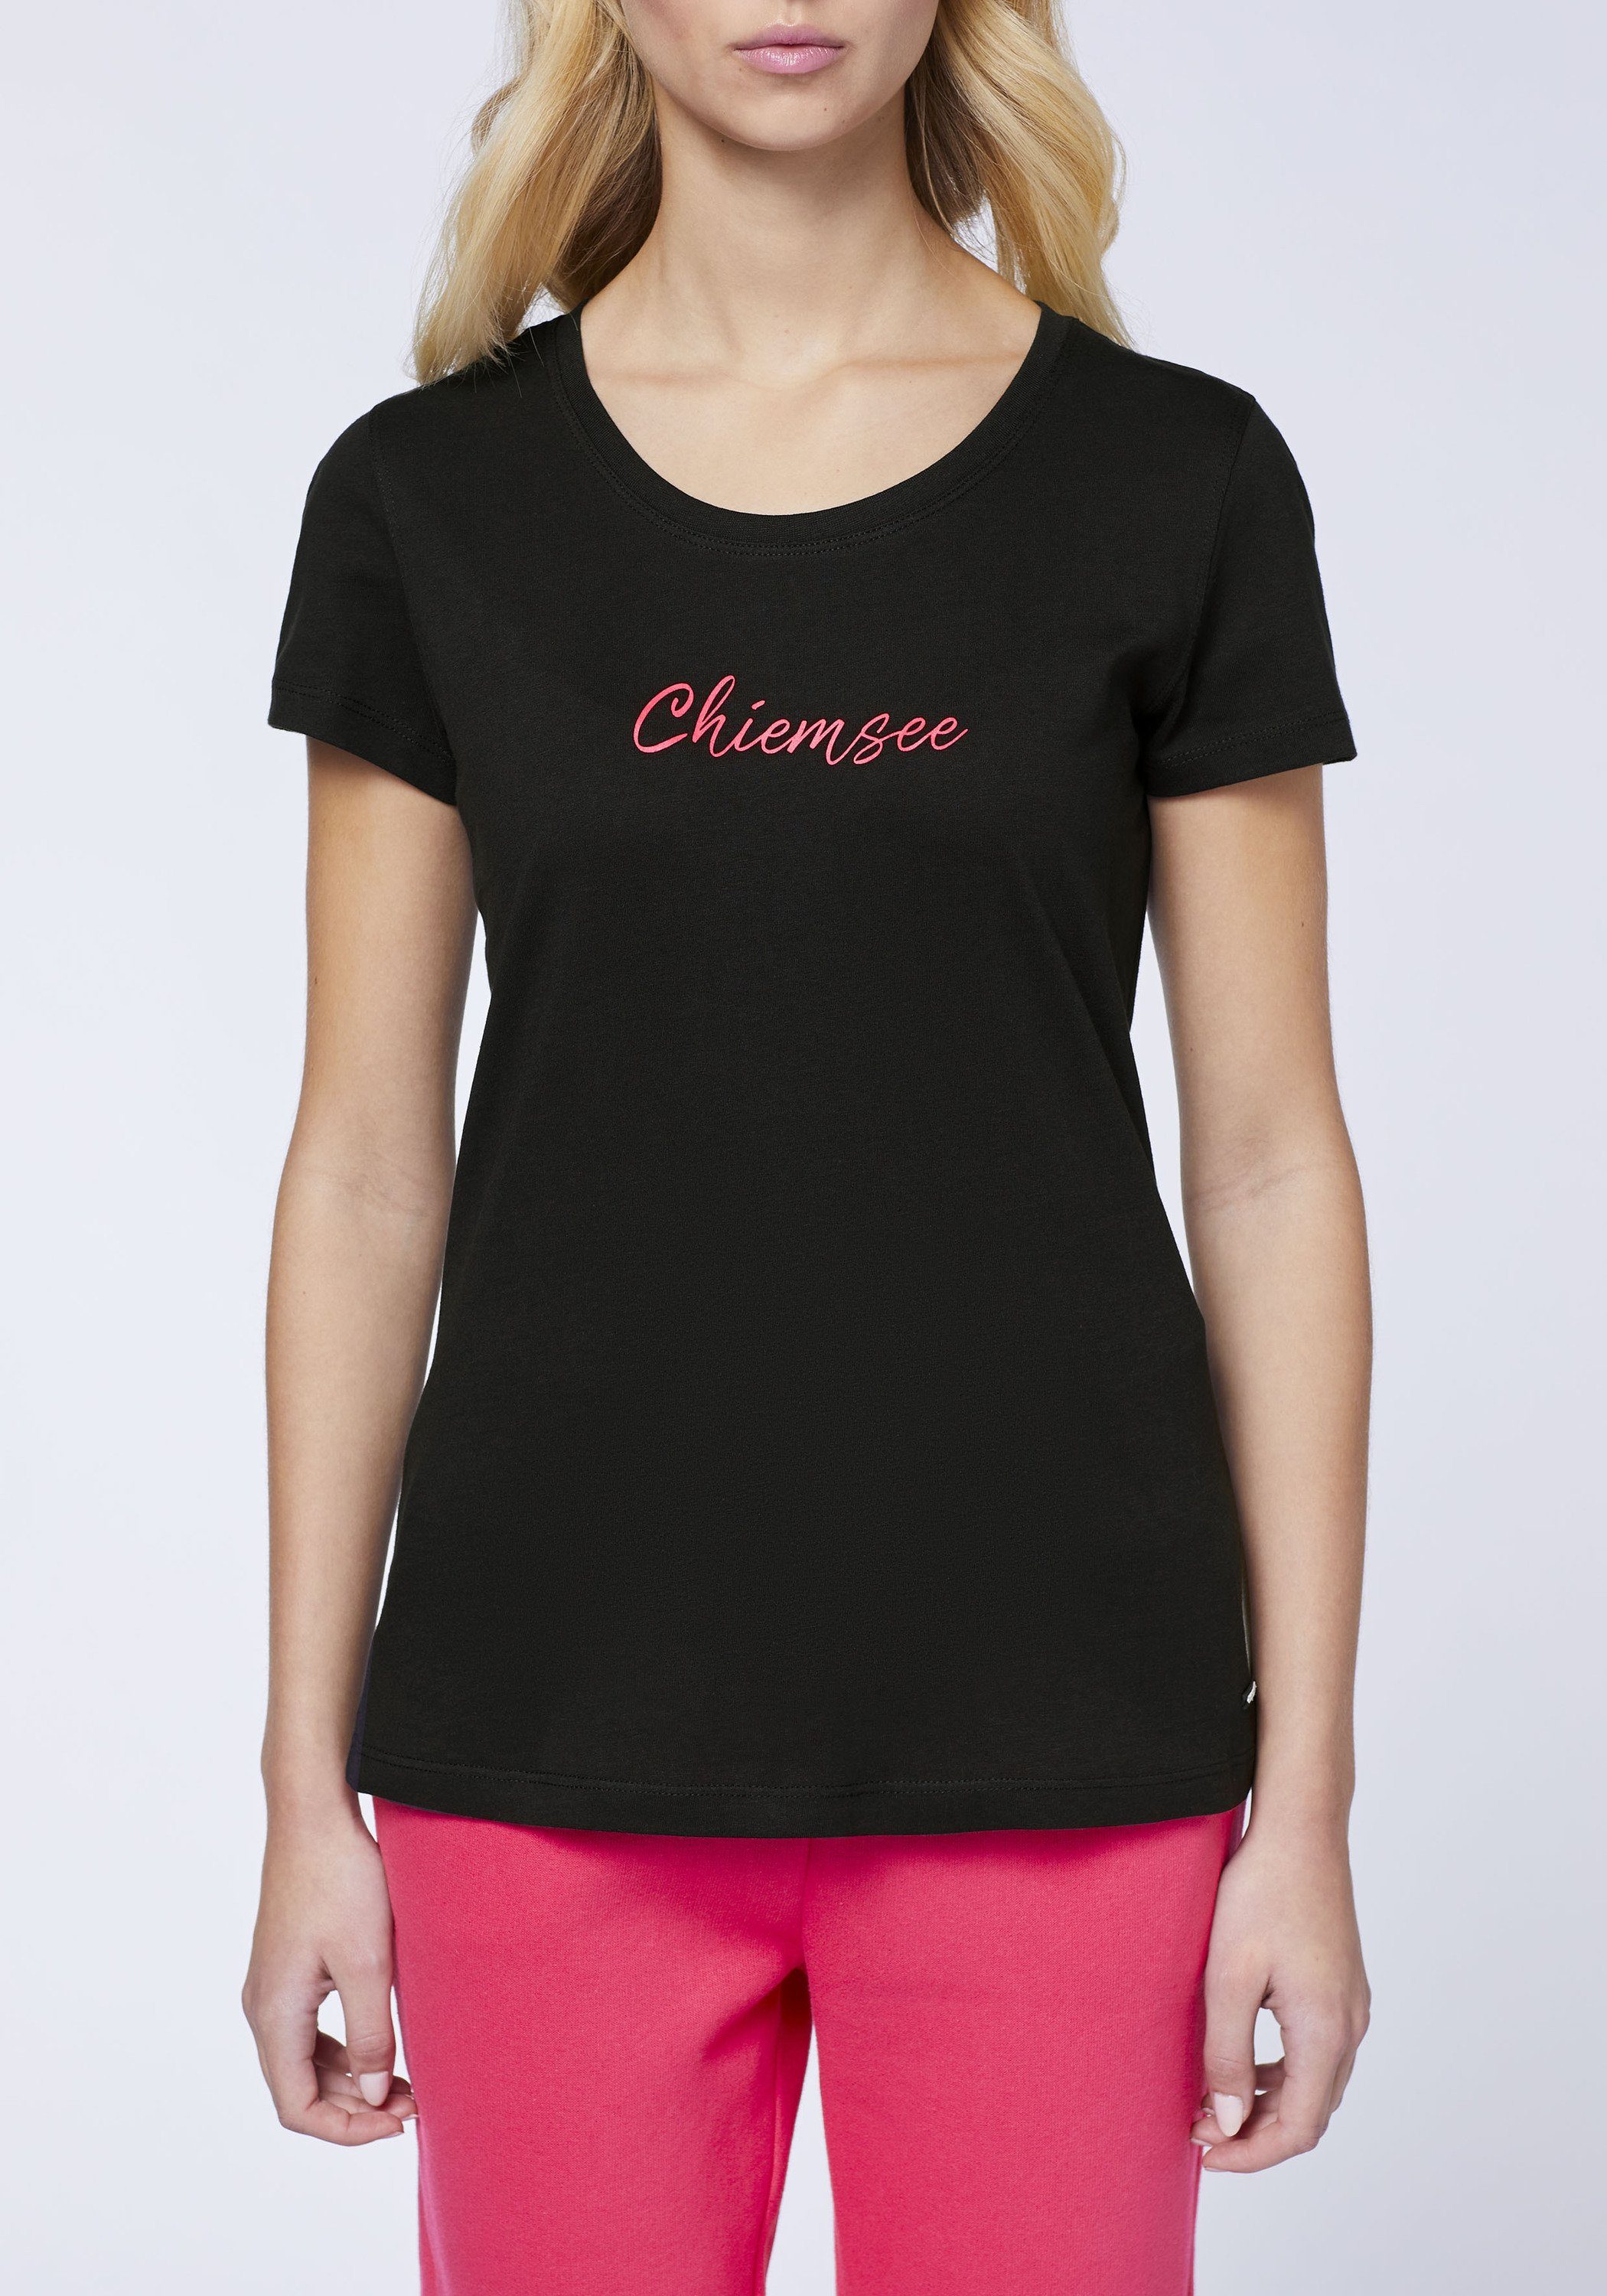 Label-Look Chiemsee Beauty T-Shirt Black 1 19-3911 Print-Shirt im